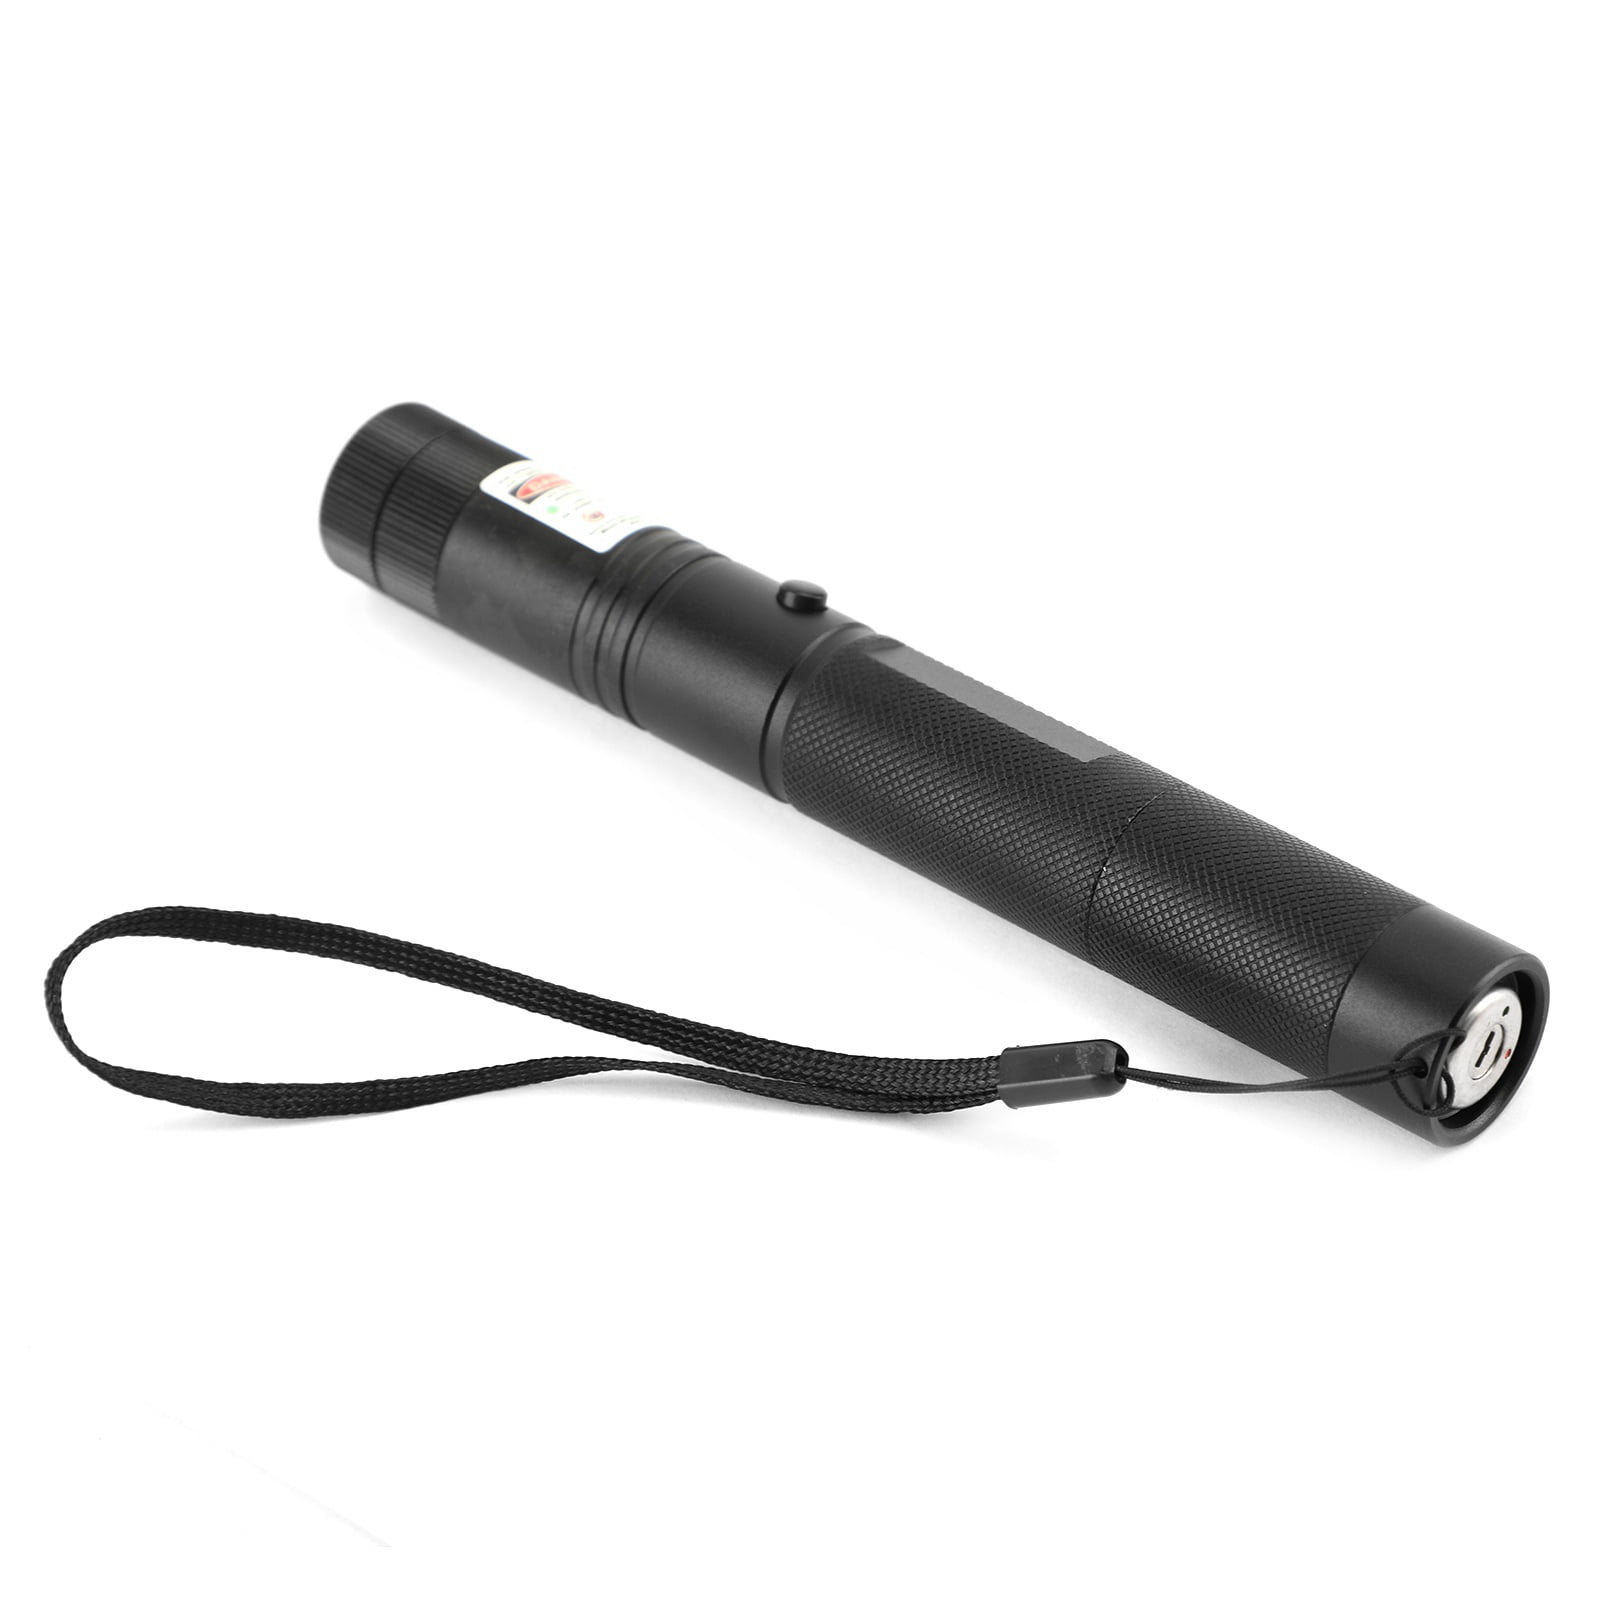 500mile 532nm 303 Green Laser Pointer Visible Beam Light Lazer Pen 